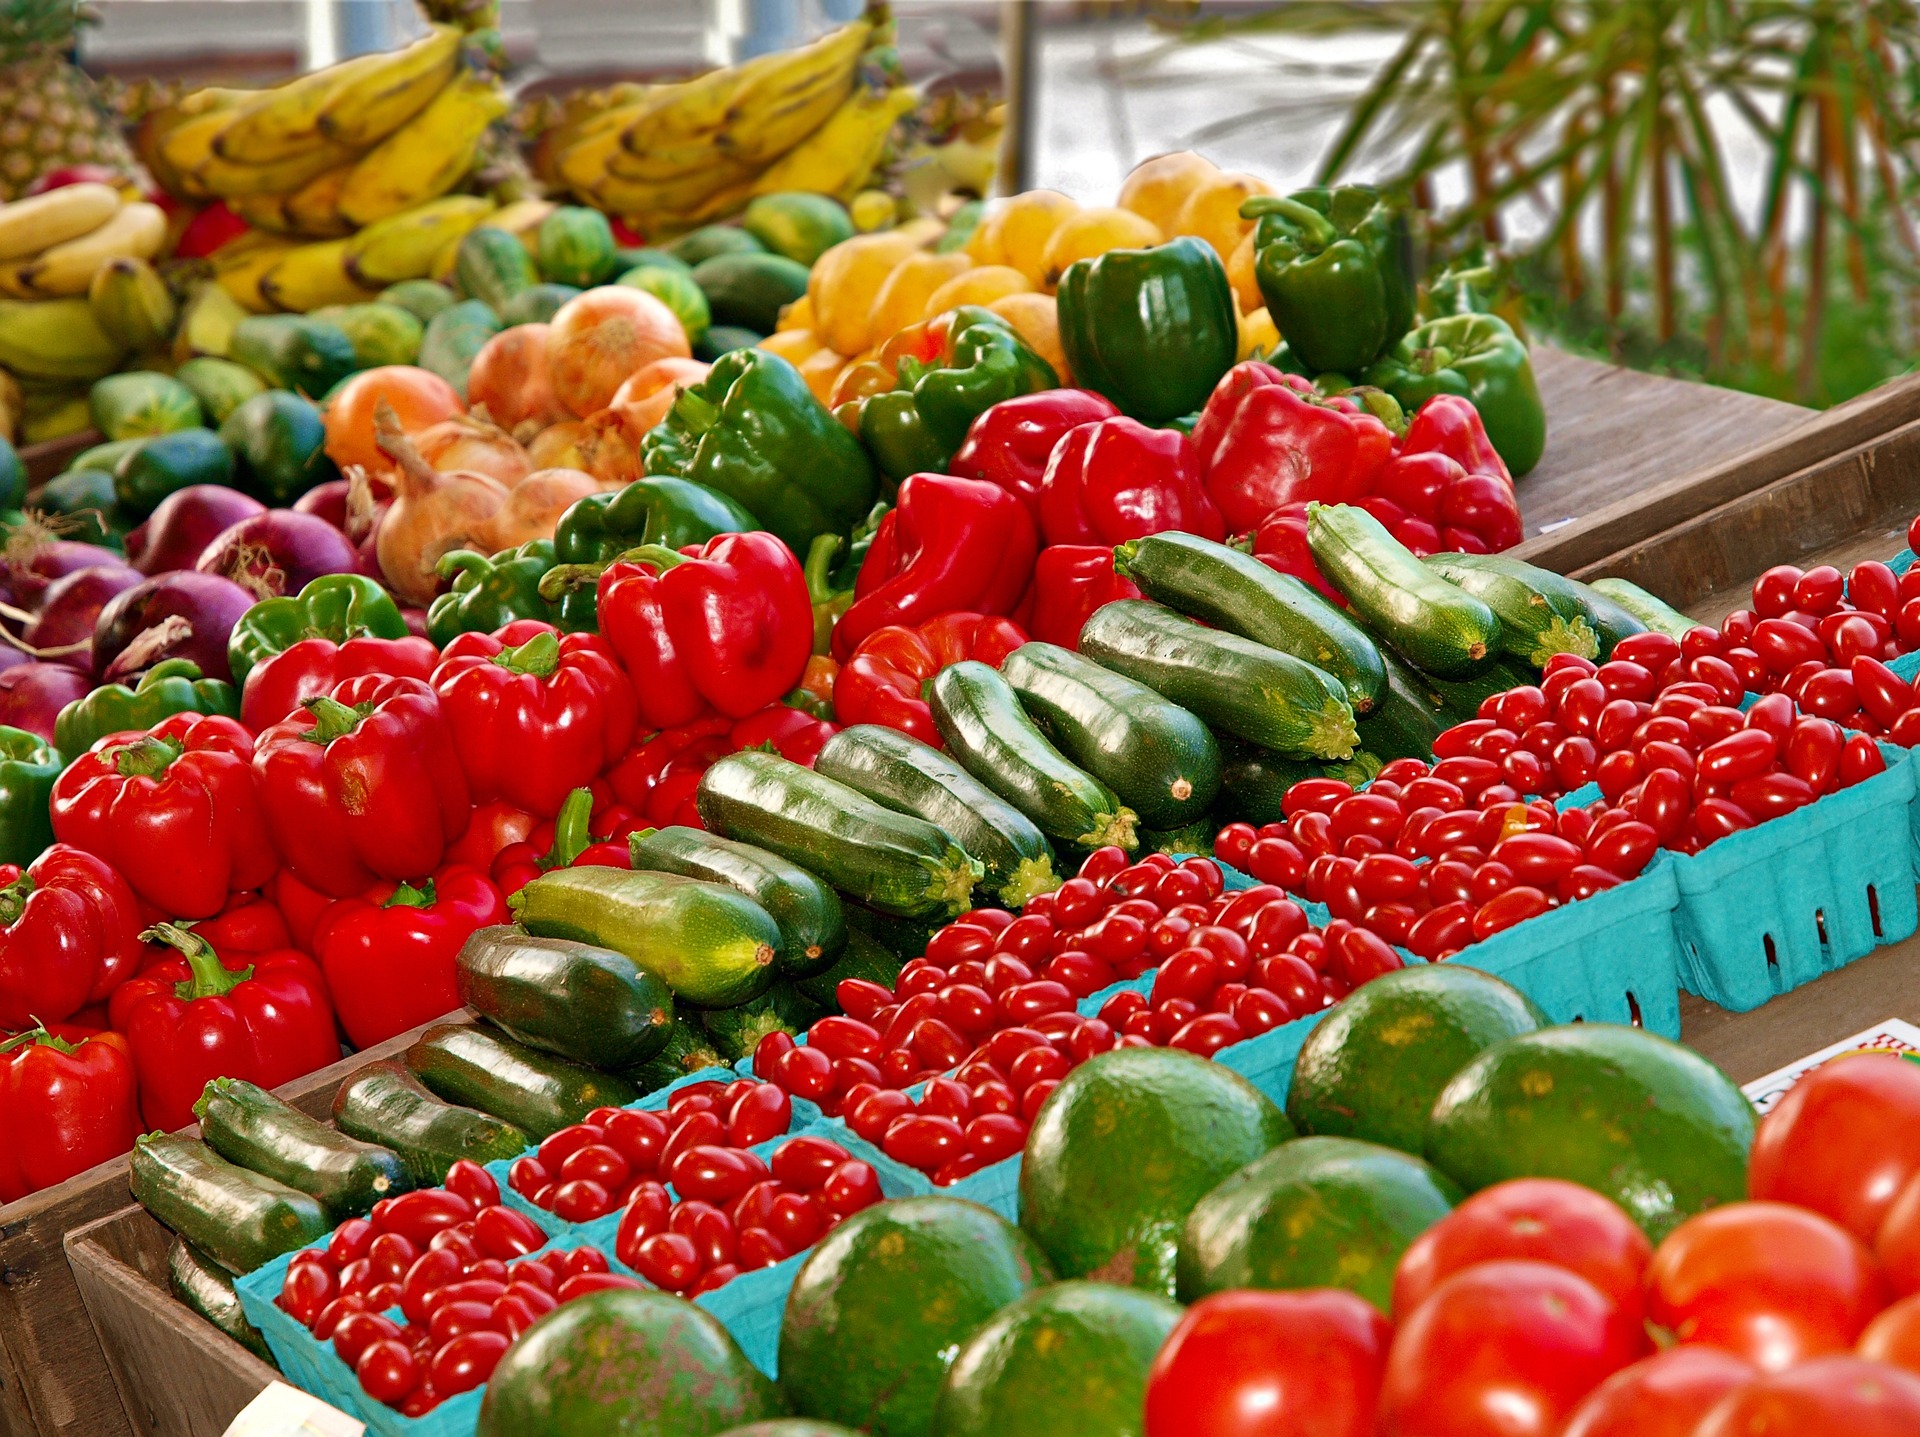 ovocie a zelenina na trhu